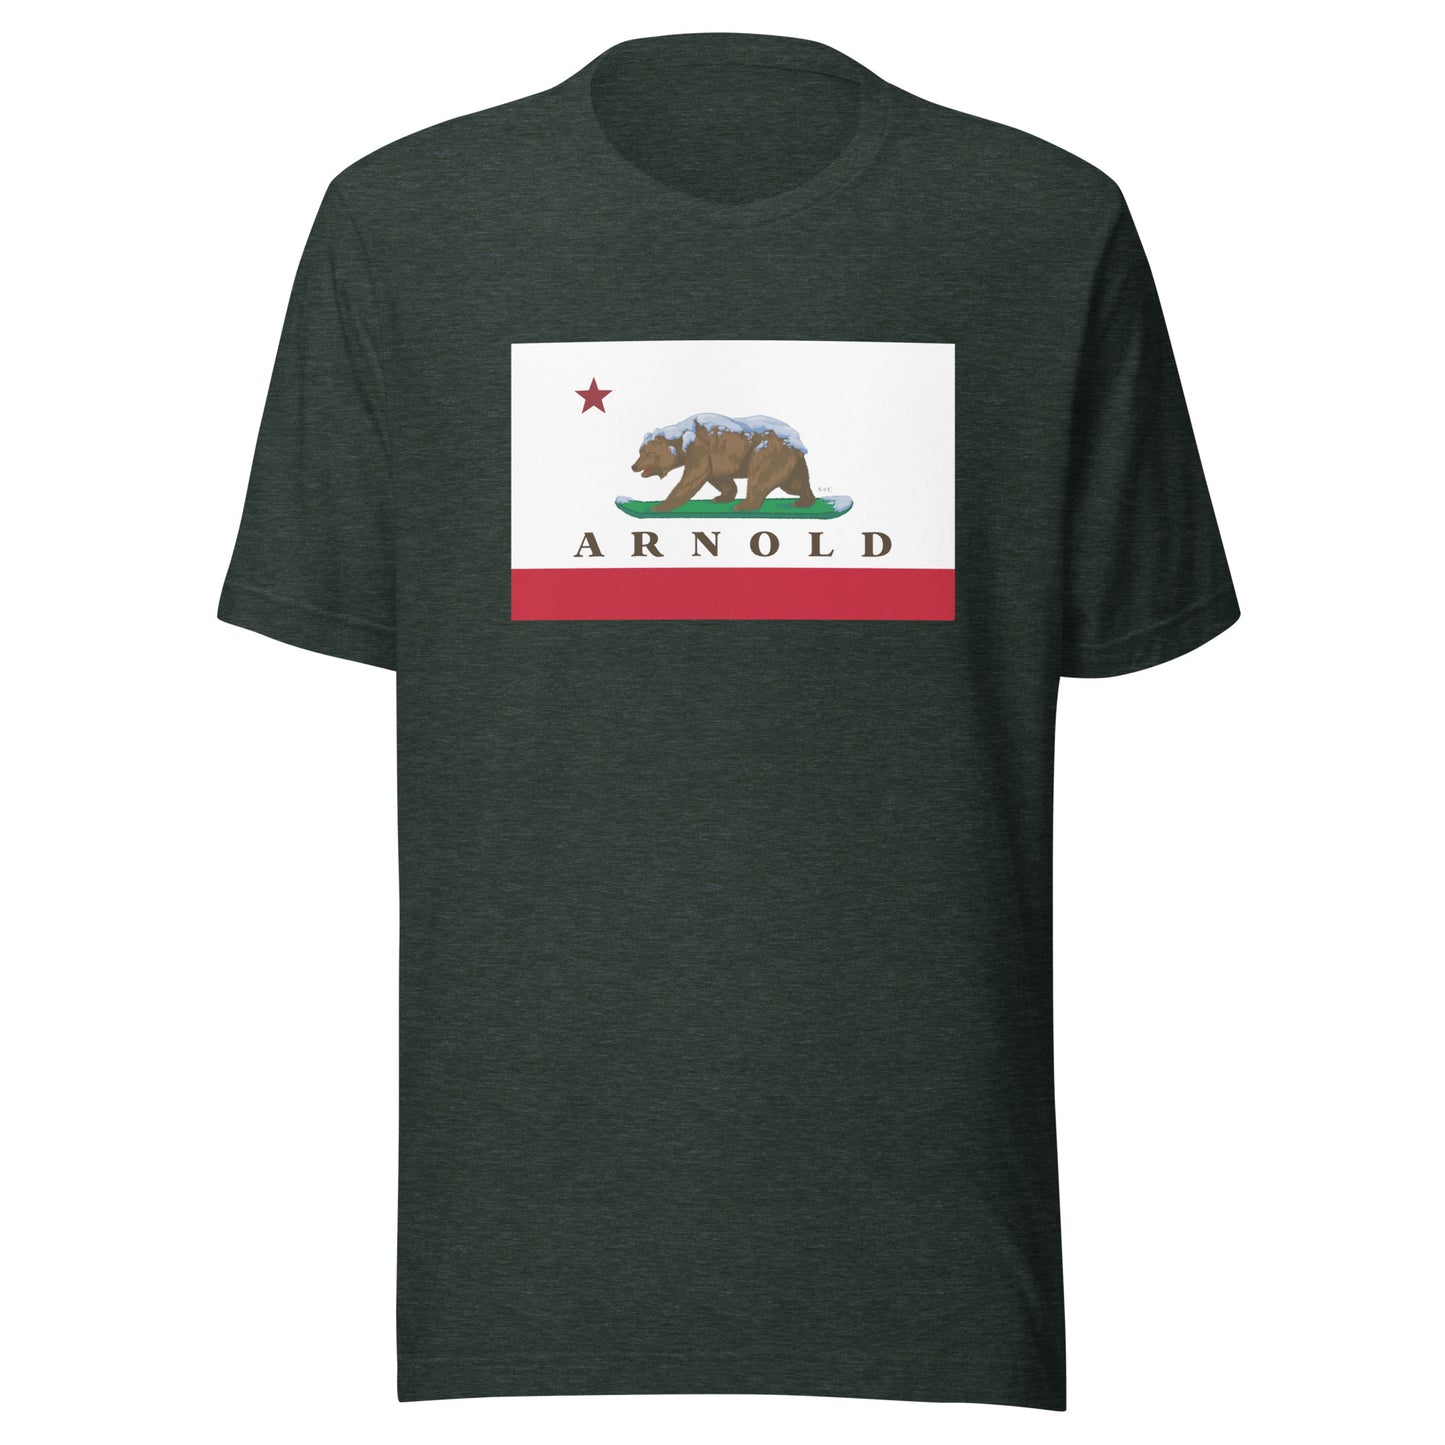 Green Arnold California shirt